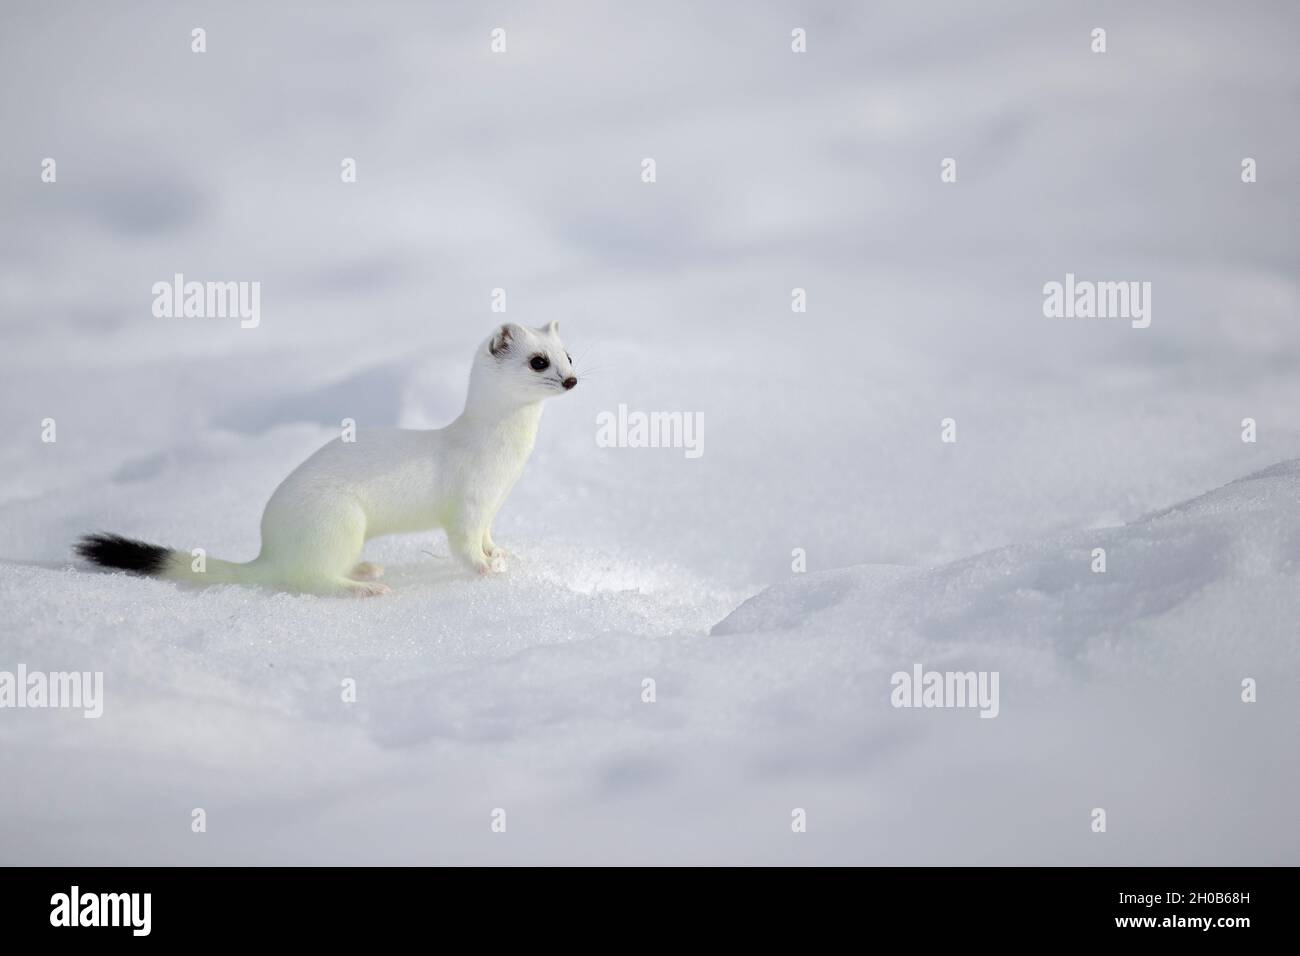 Ermine (Mustela erminea) in winter coat, in the snow, Vaud, Switzerland. Stock Photo